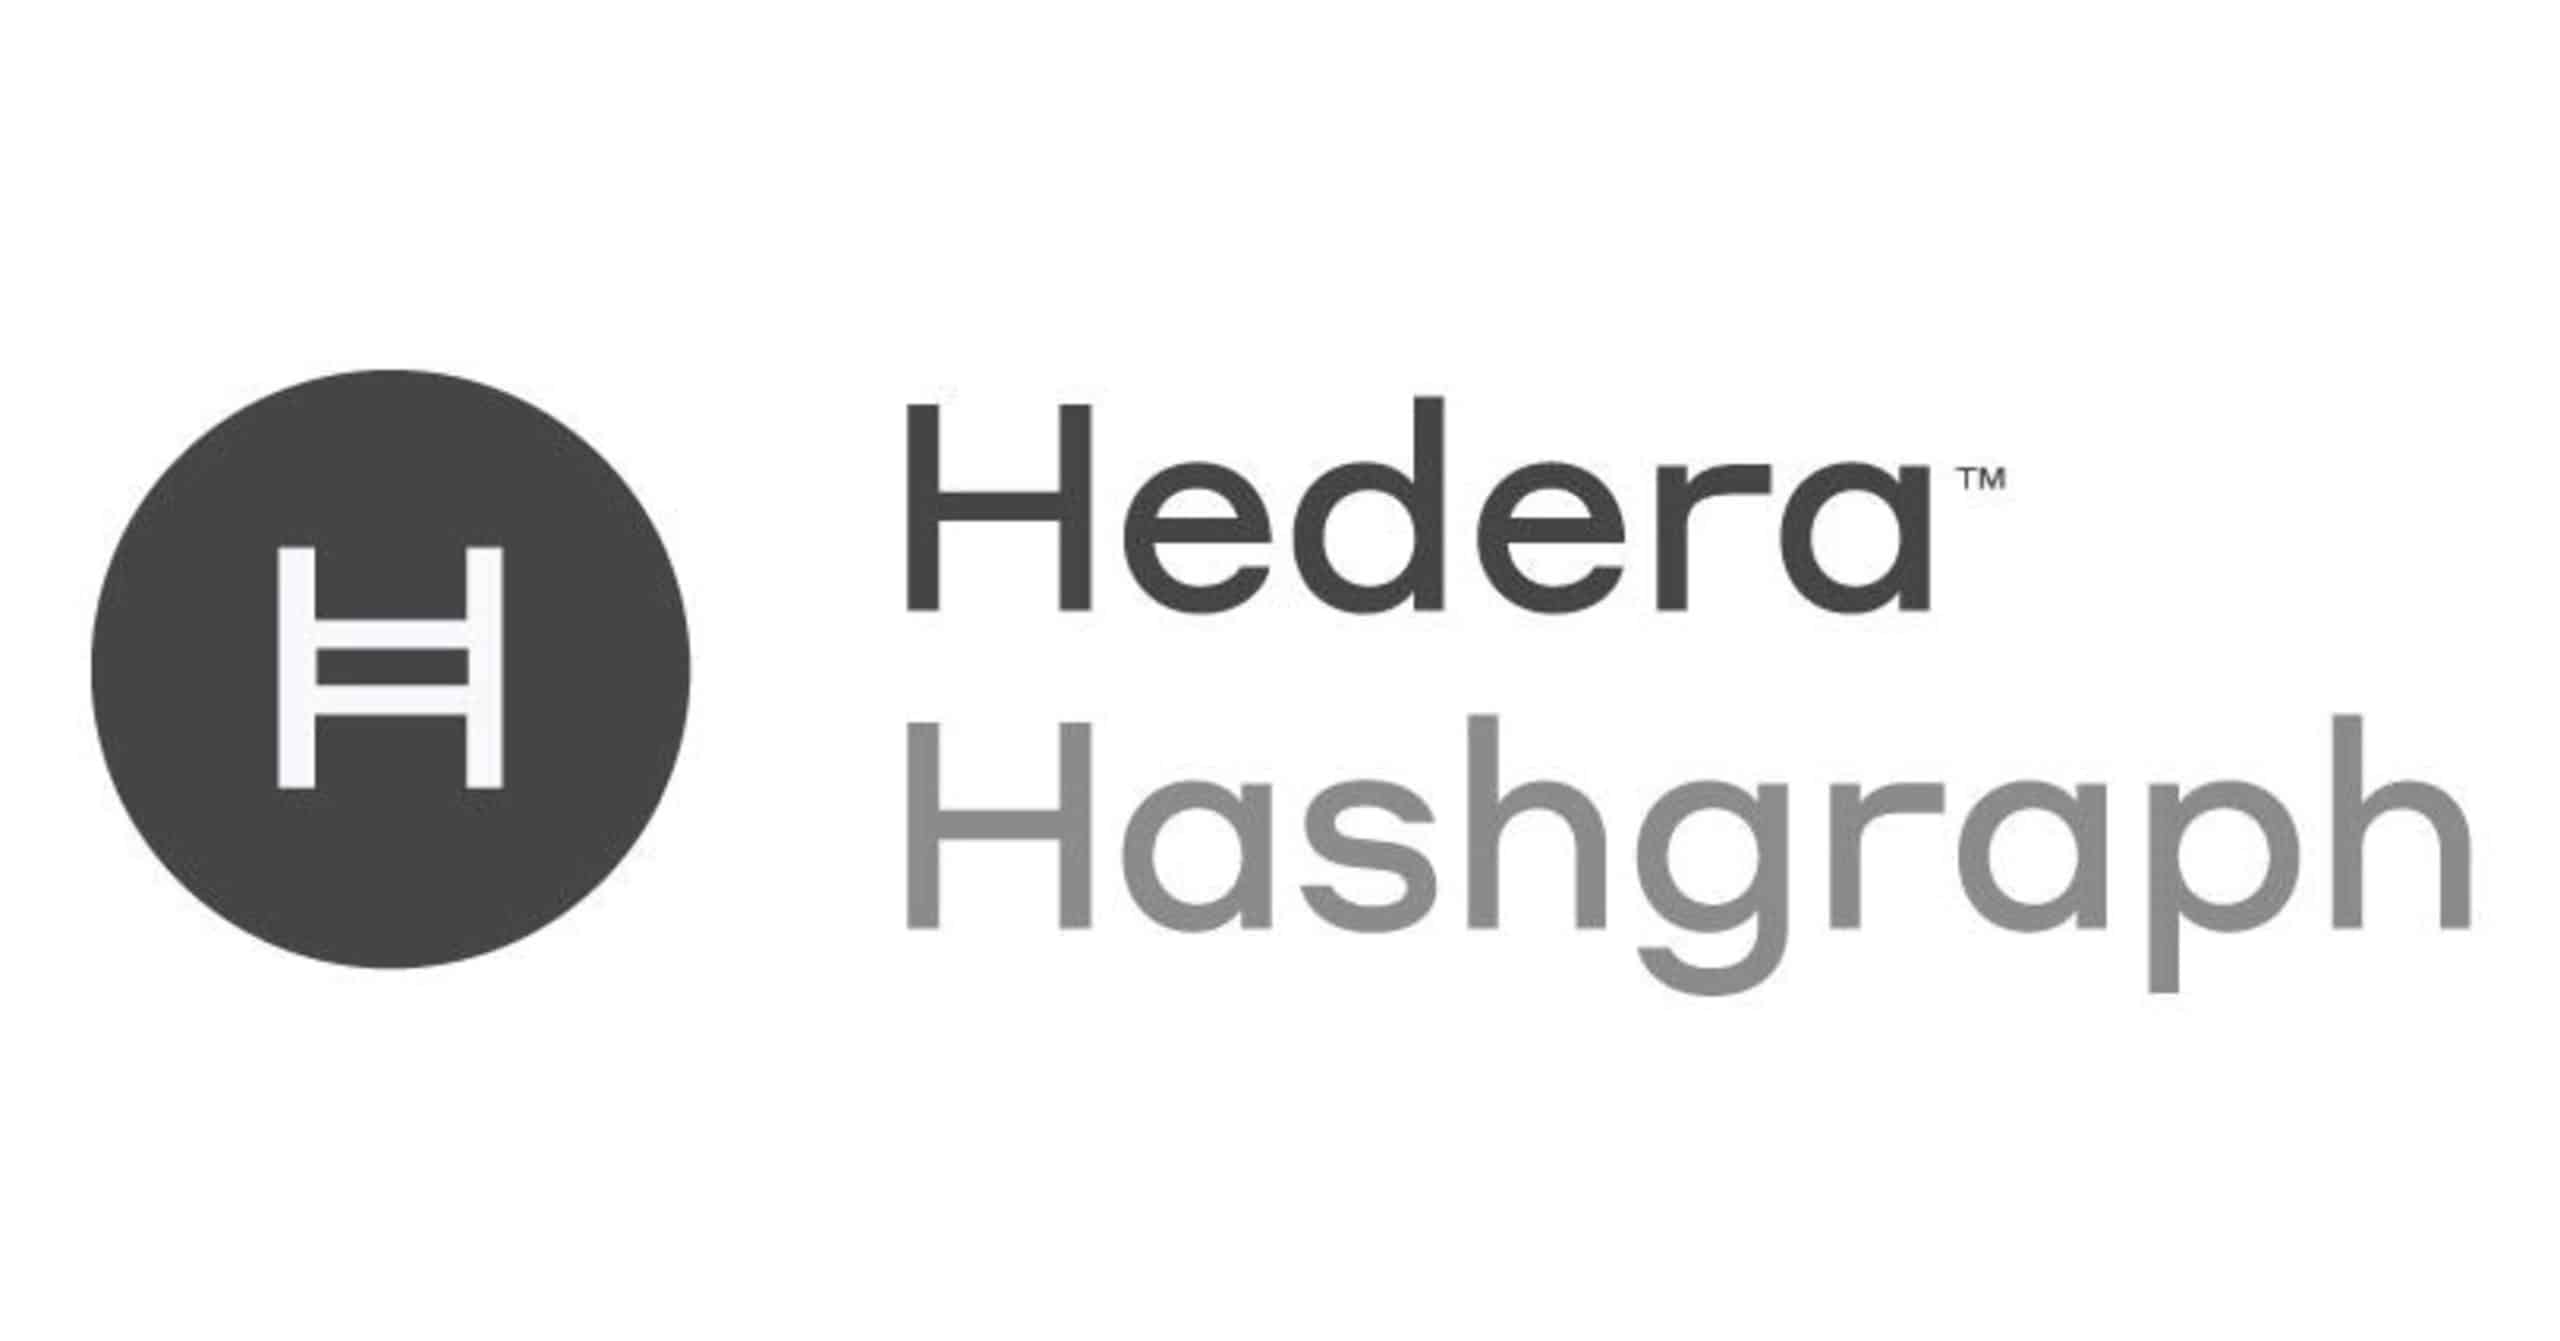 Hedera hashgraph - nouvelle crypto-monnaie